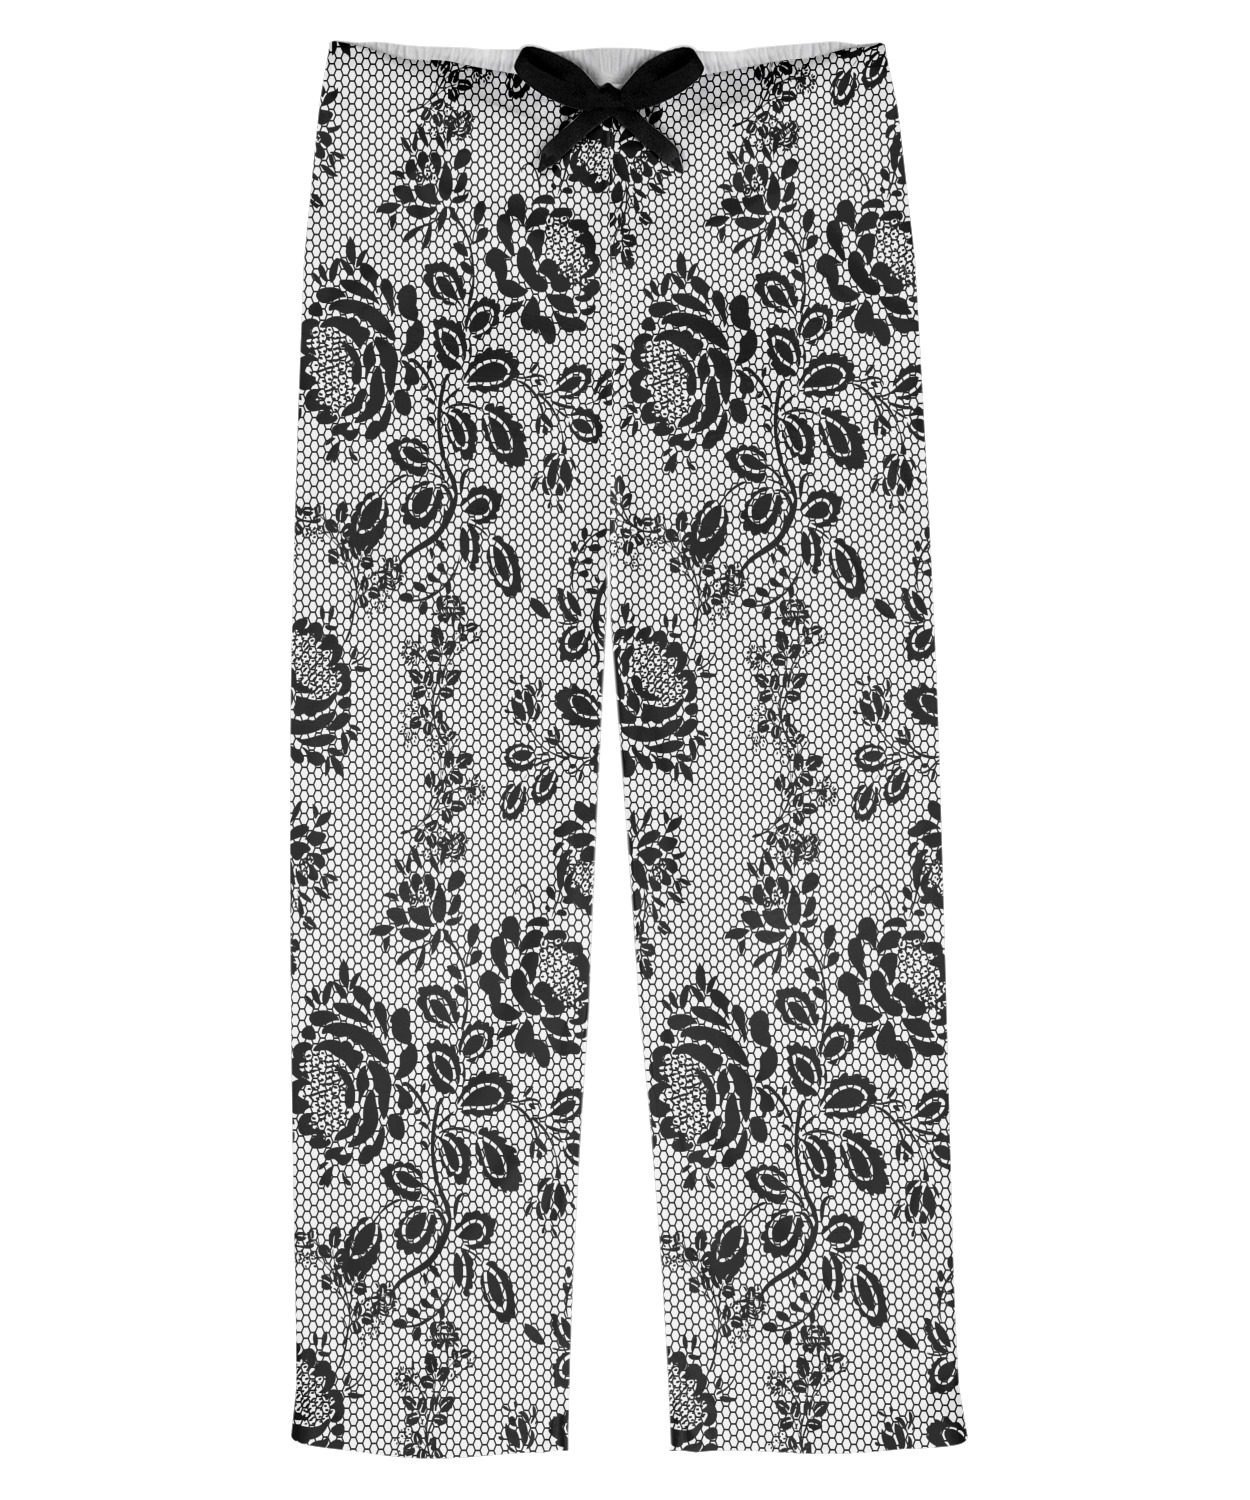 Black Lace Mens Pajama Pants (Personalized) - YouCustomizeIt